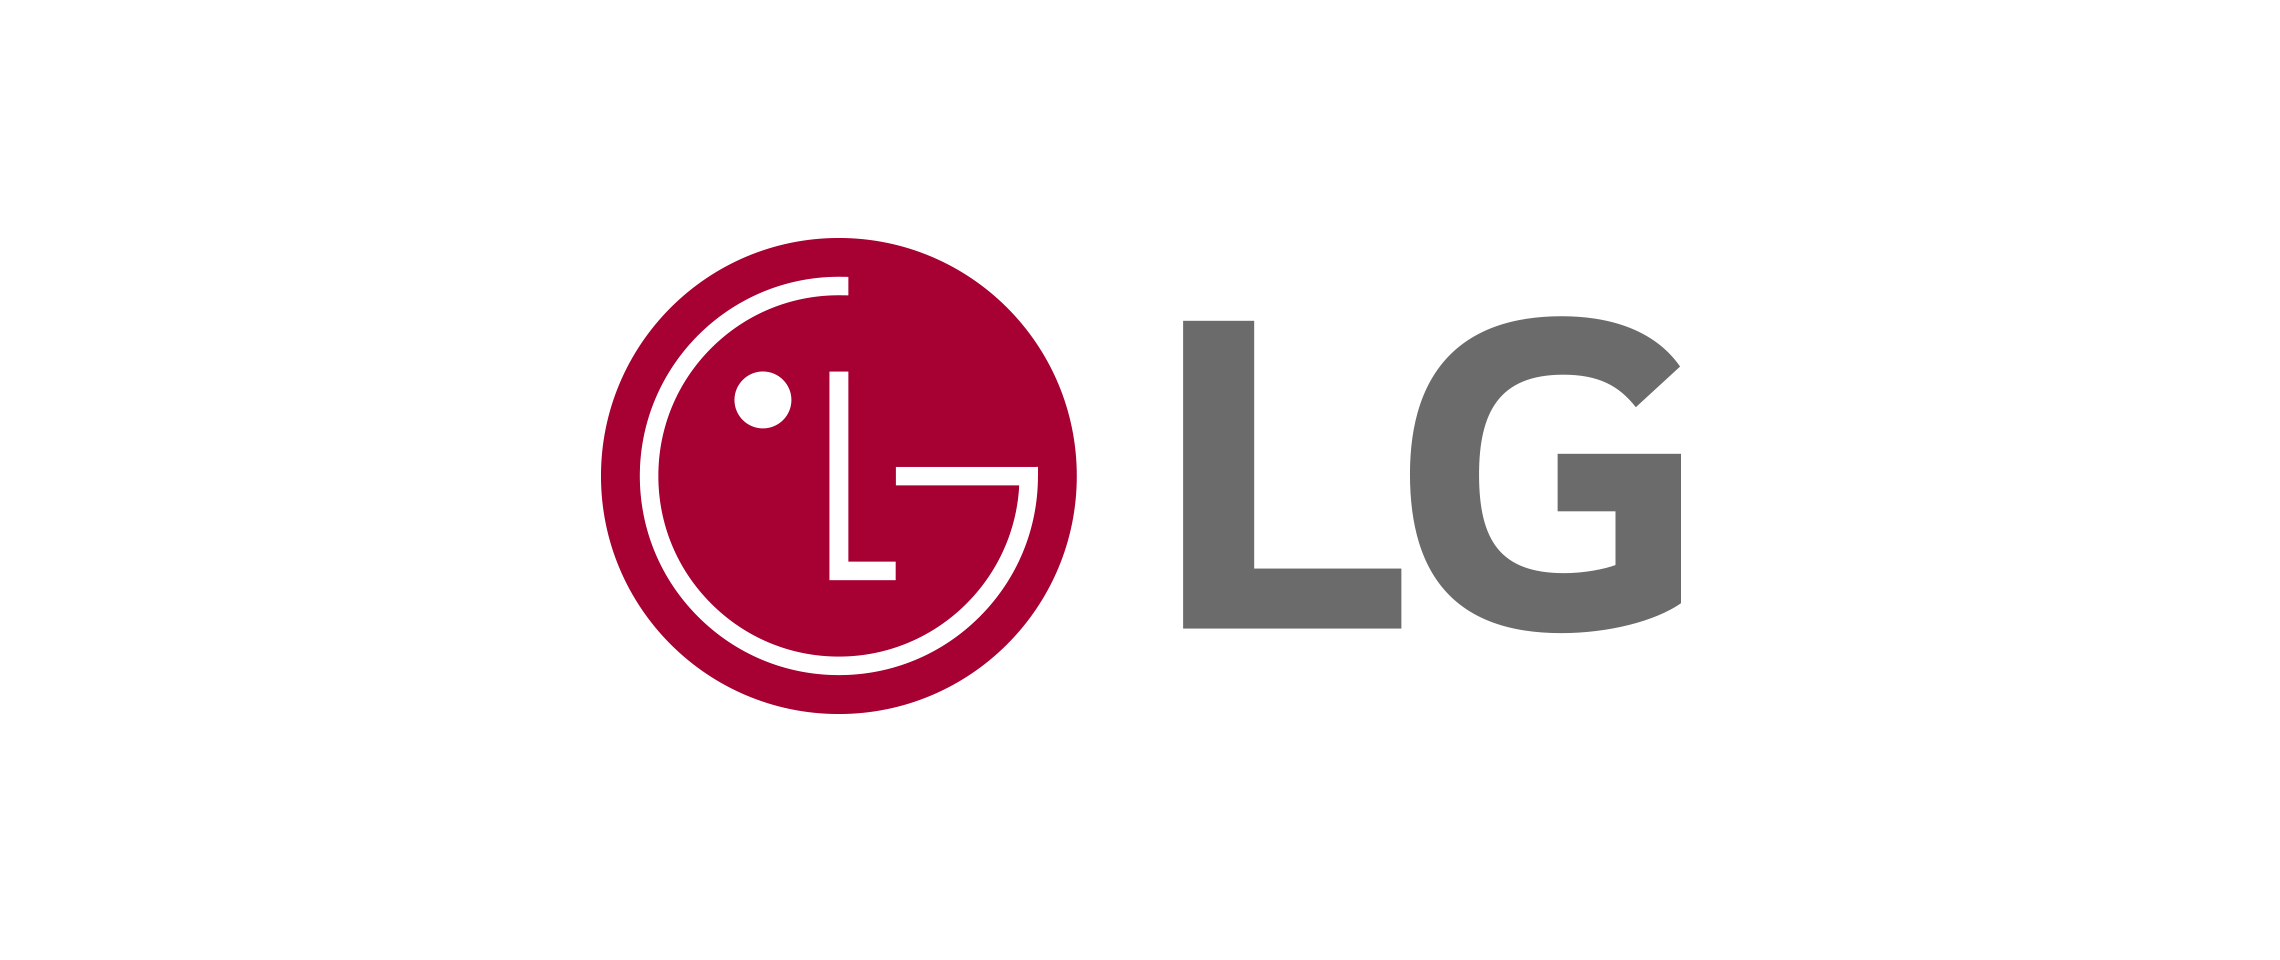 lg-logo-partnership-with-bang-olufsen-yields-top-class-1